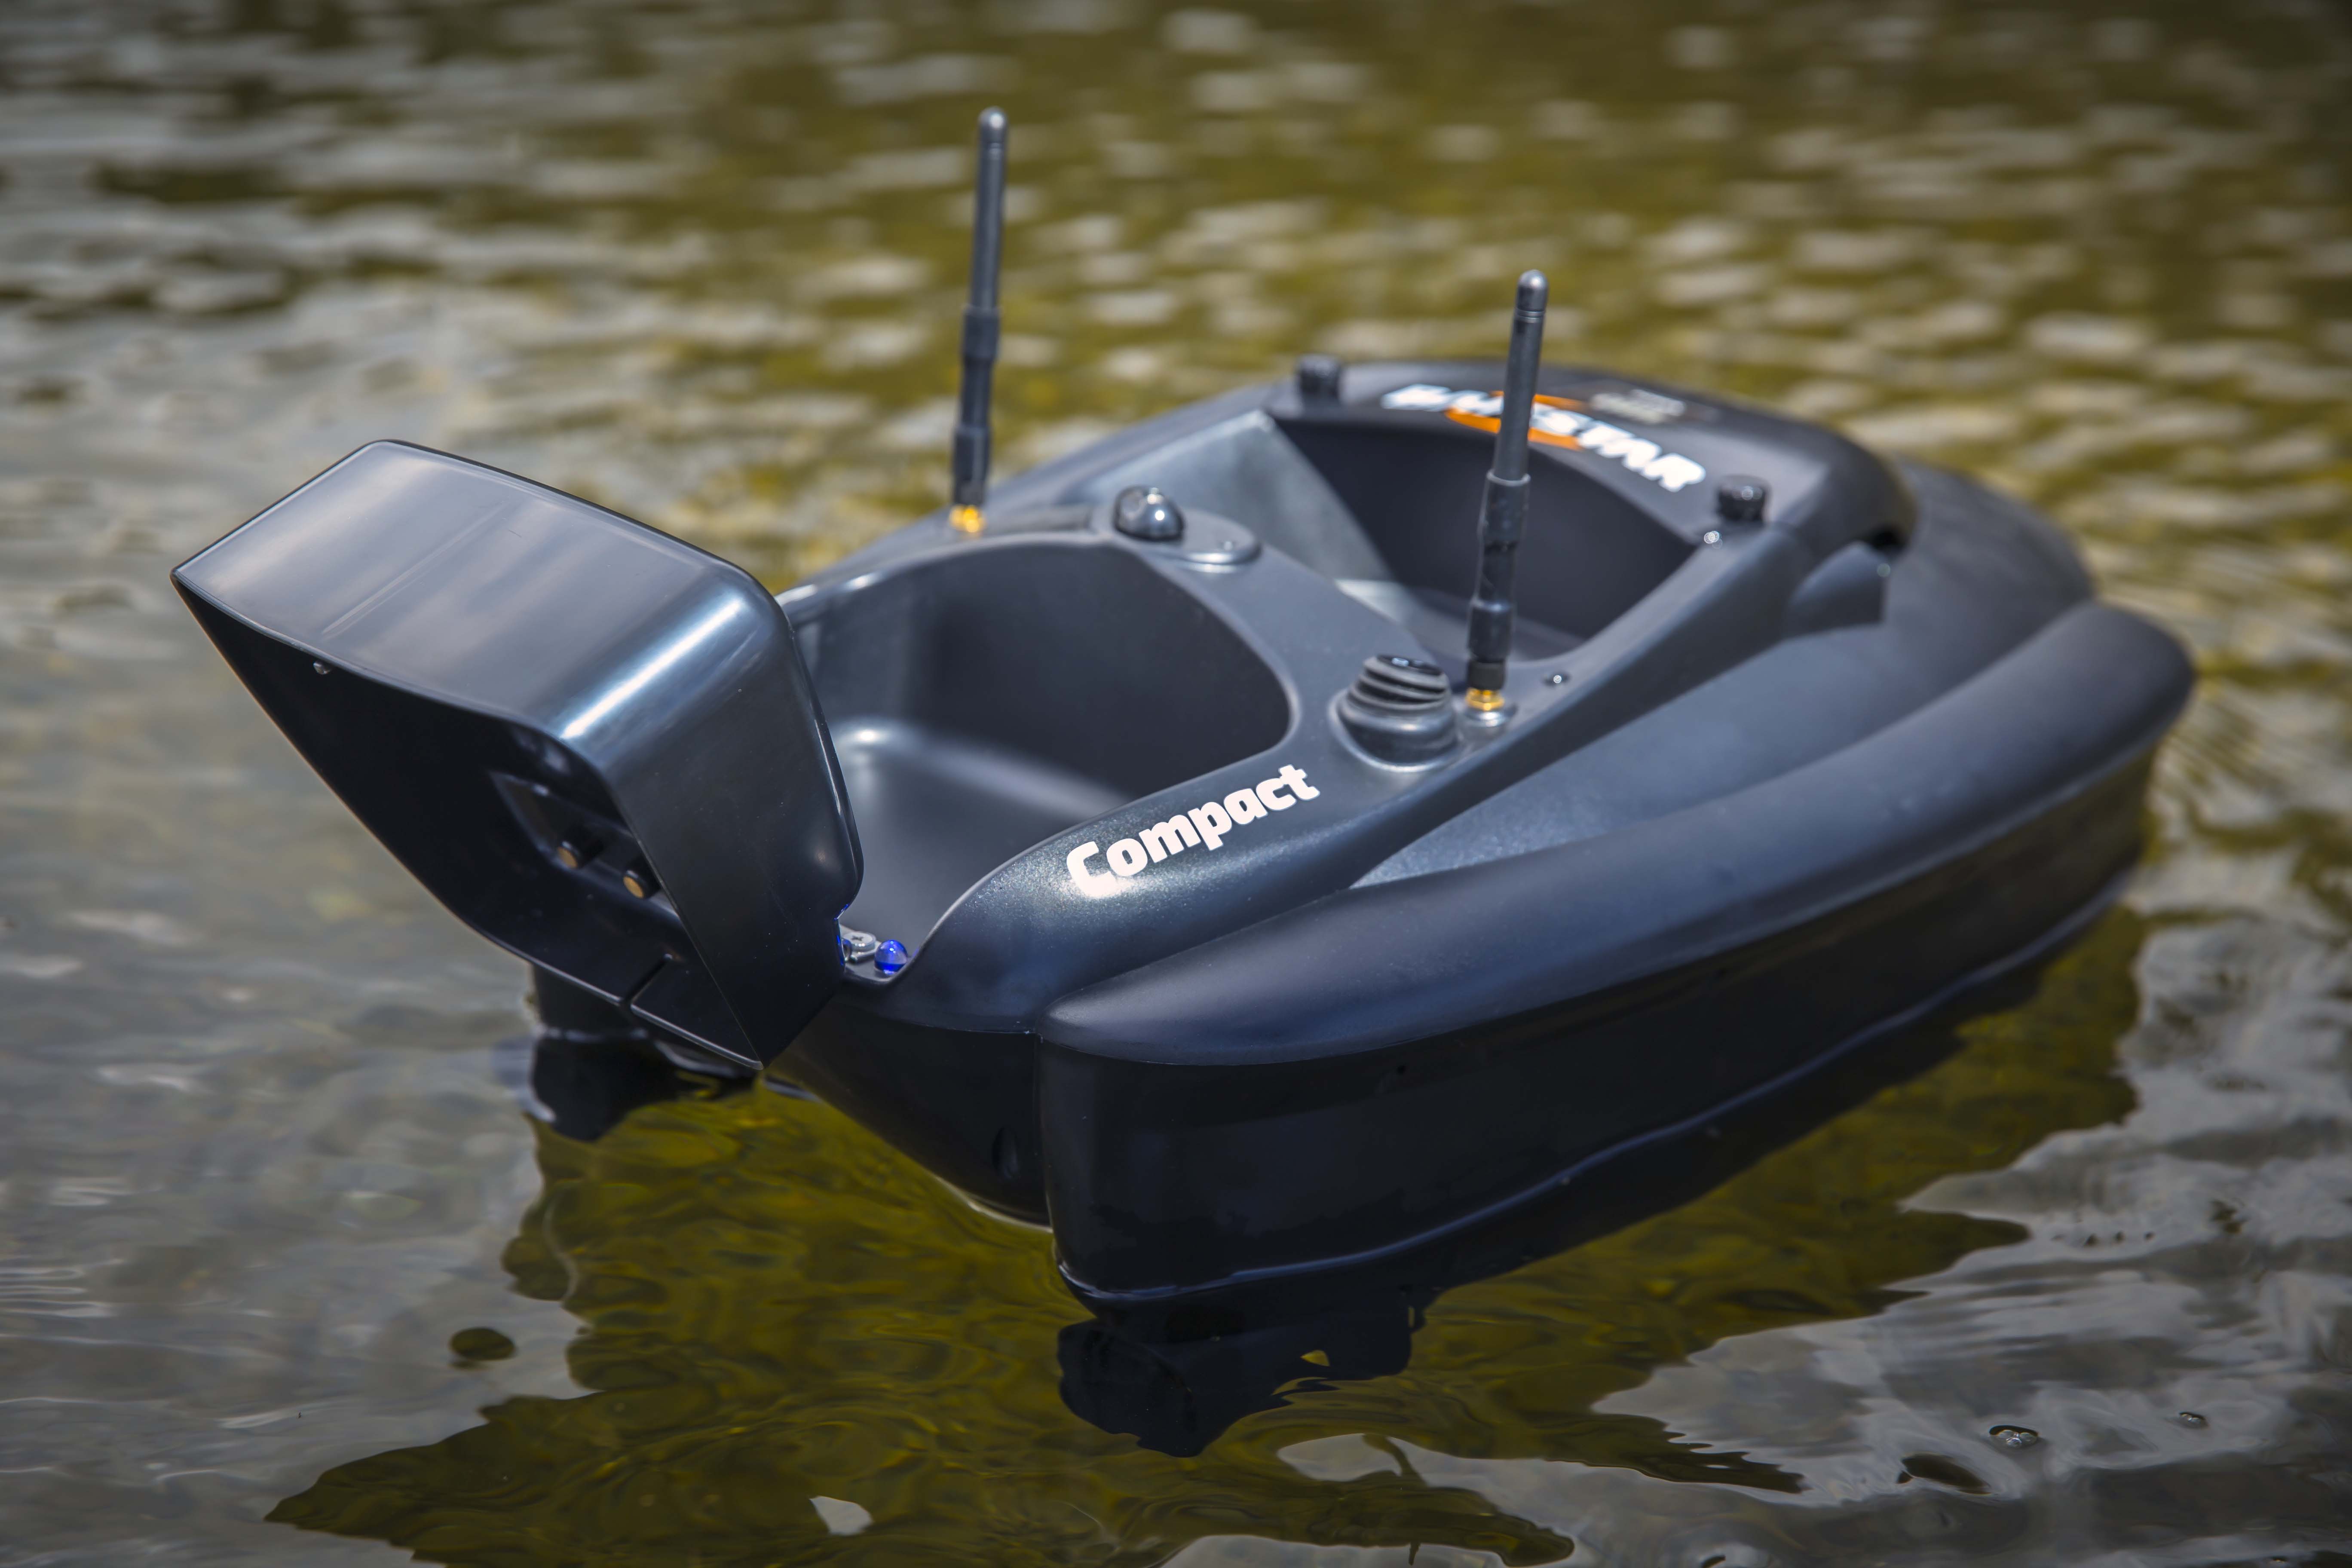 Łódka Zanętowa BaitStar Compact Black + Echosonda Sonartab